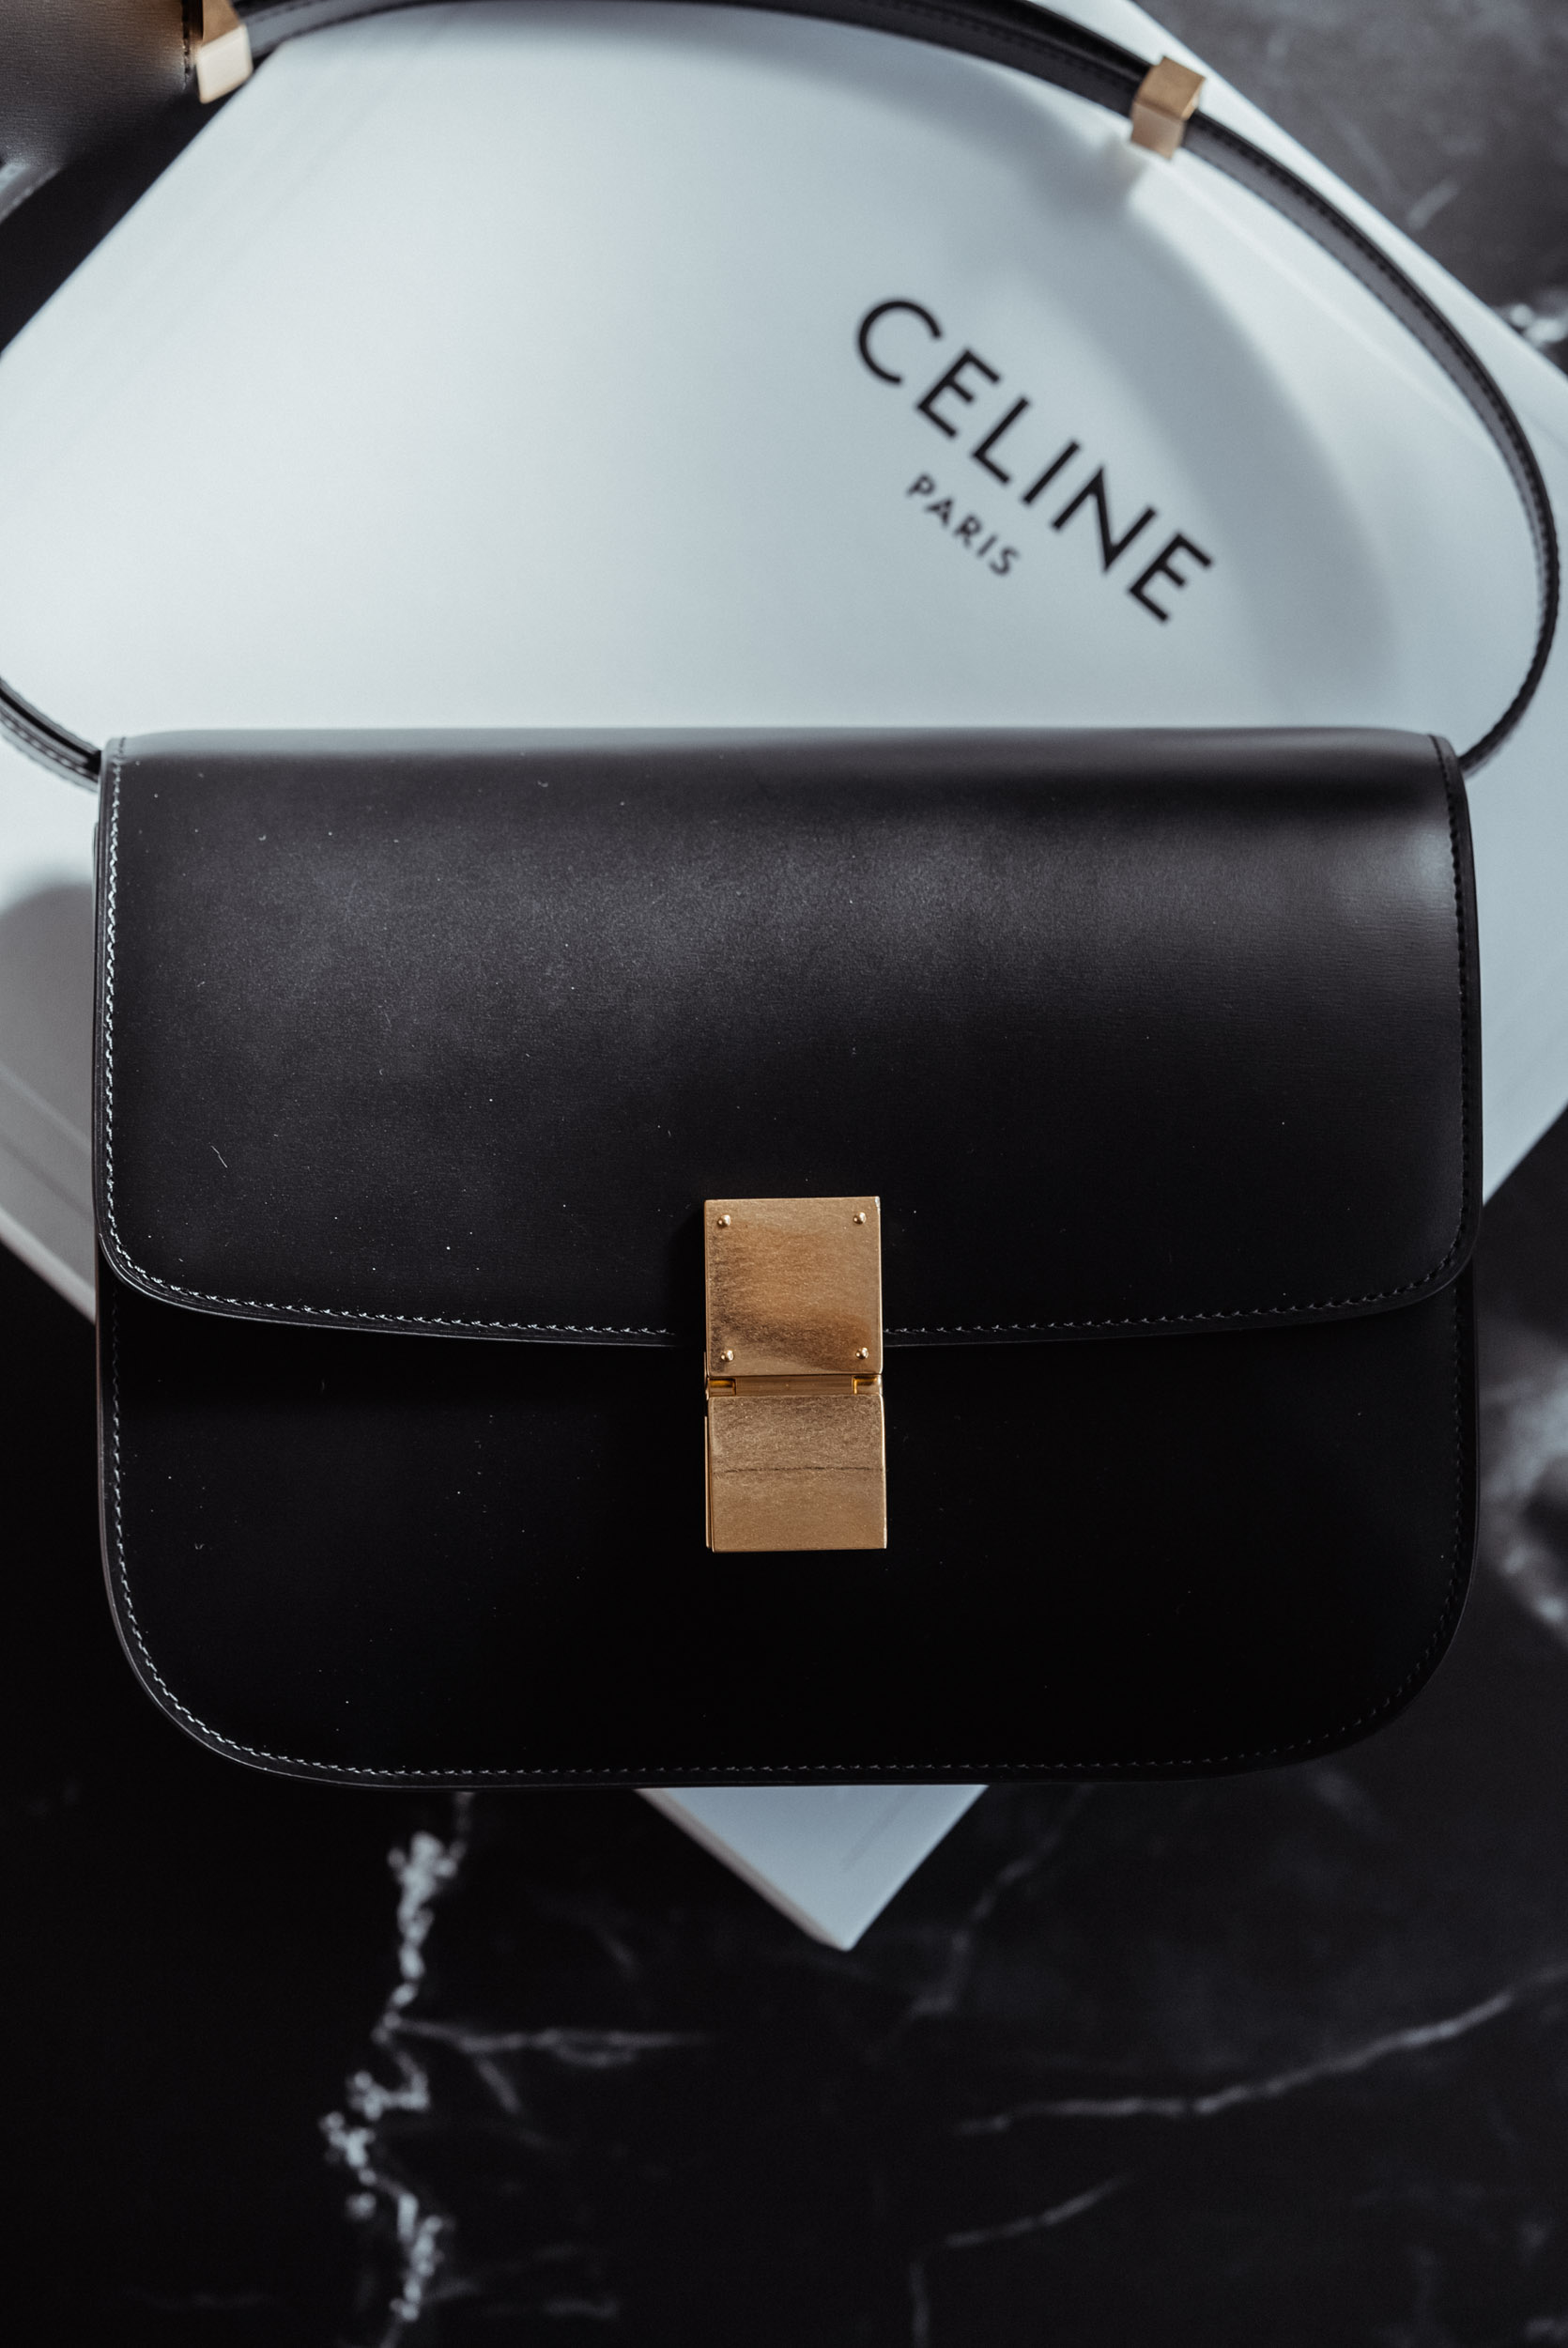 MEDIUM CLASSIC BAG IN BOX CALFSKIN black review celine an trieu box bag